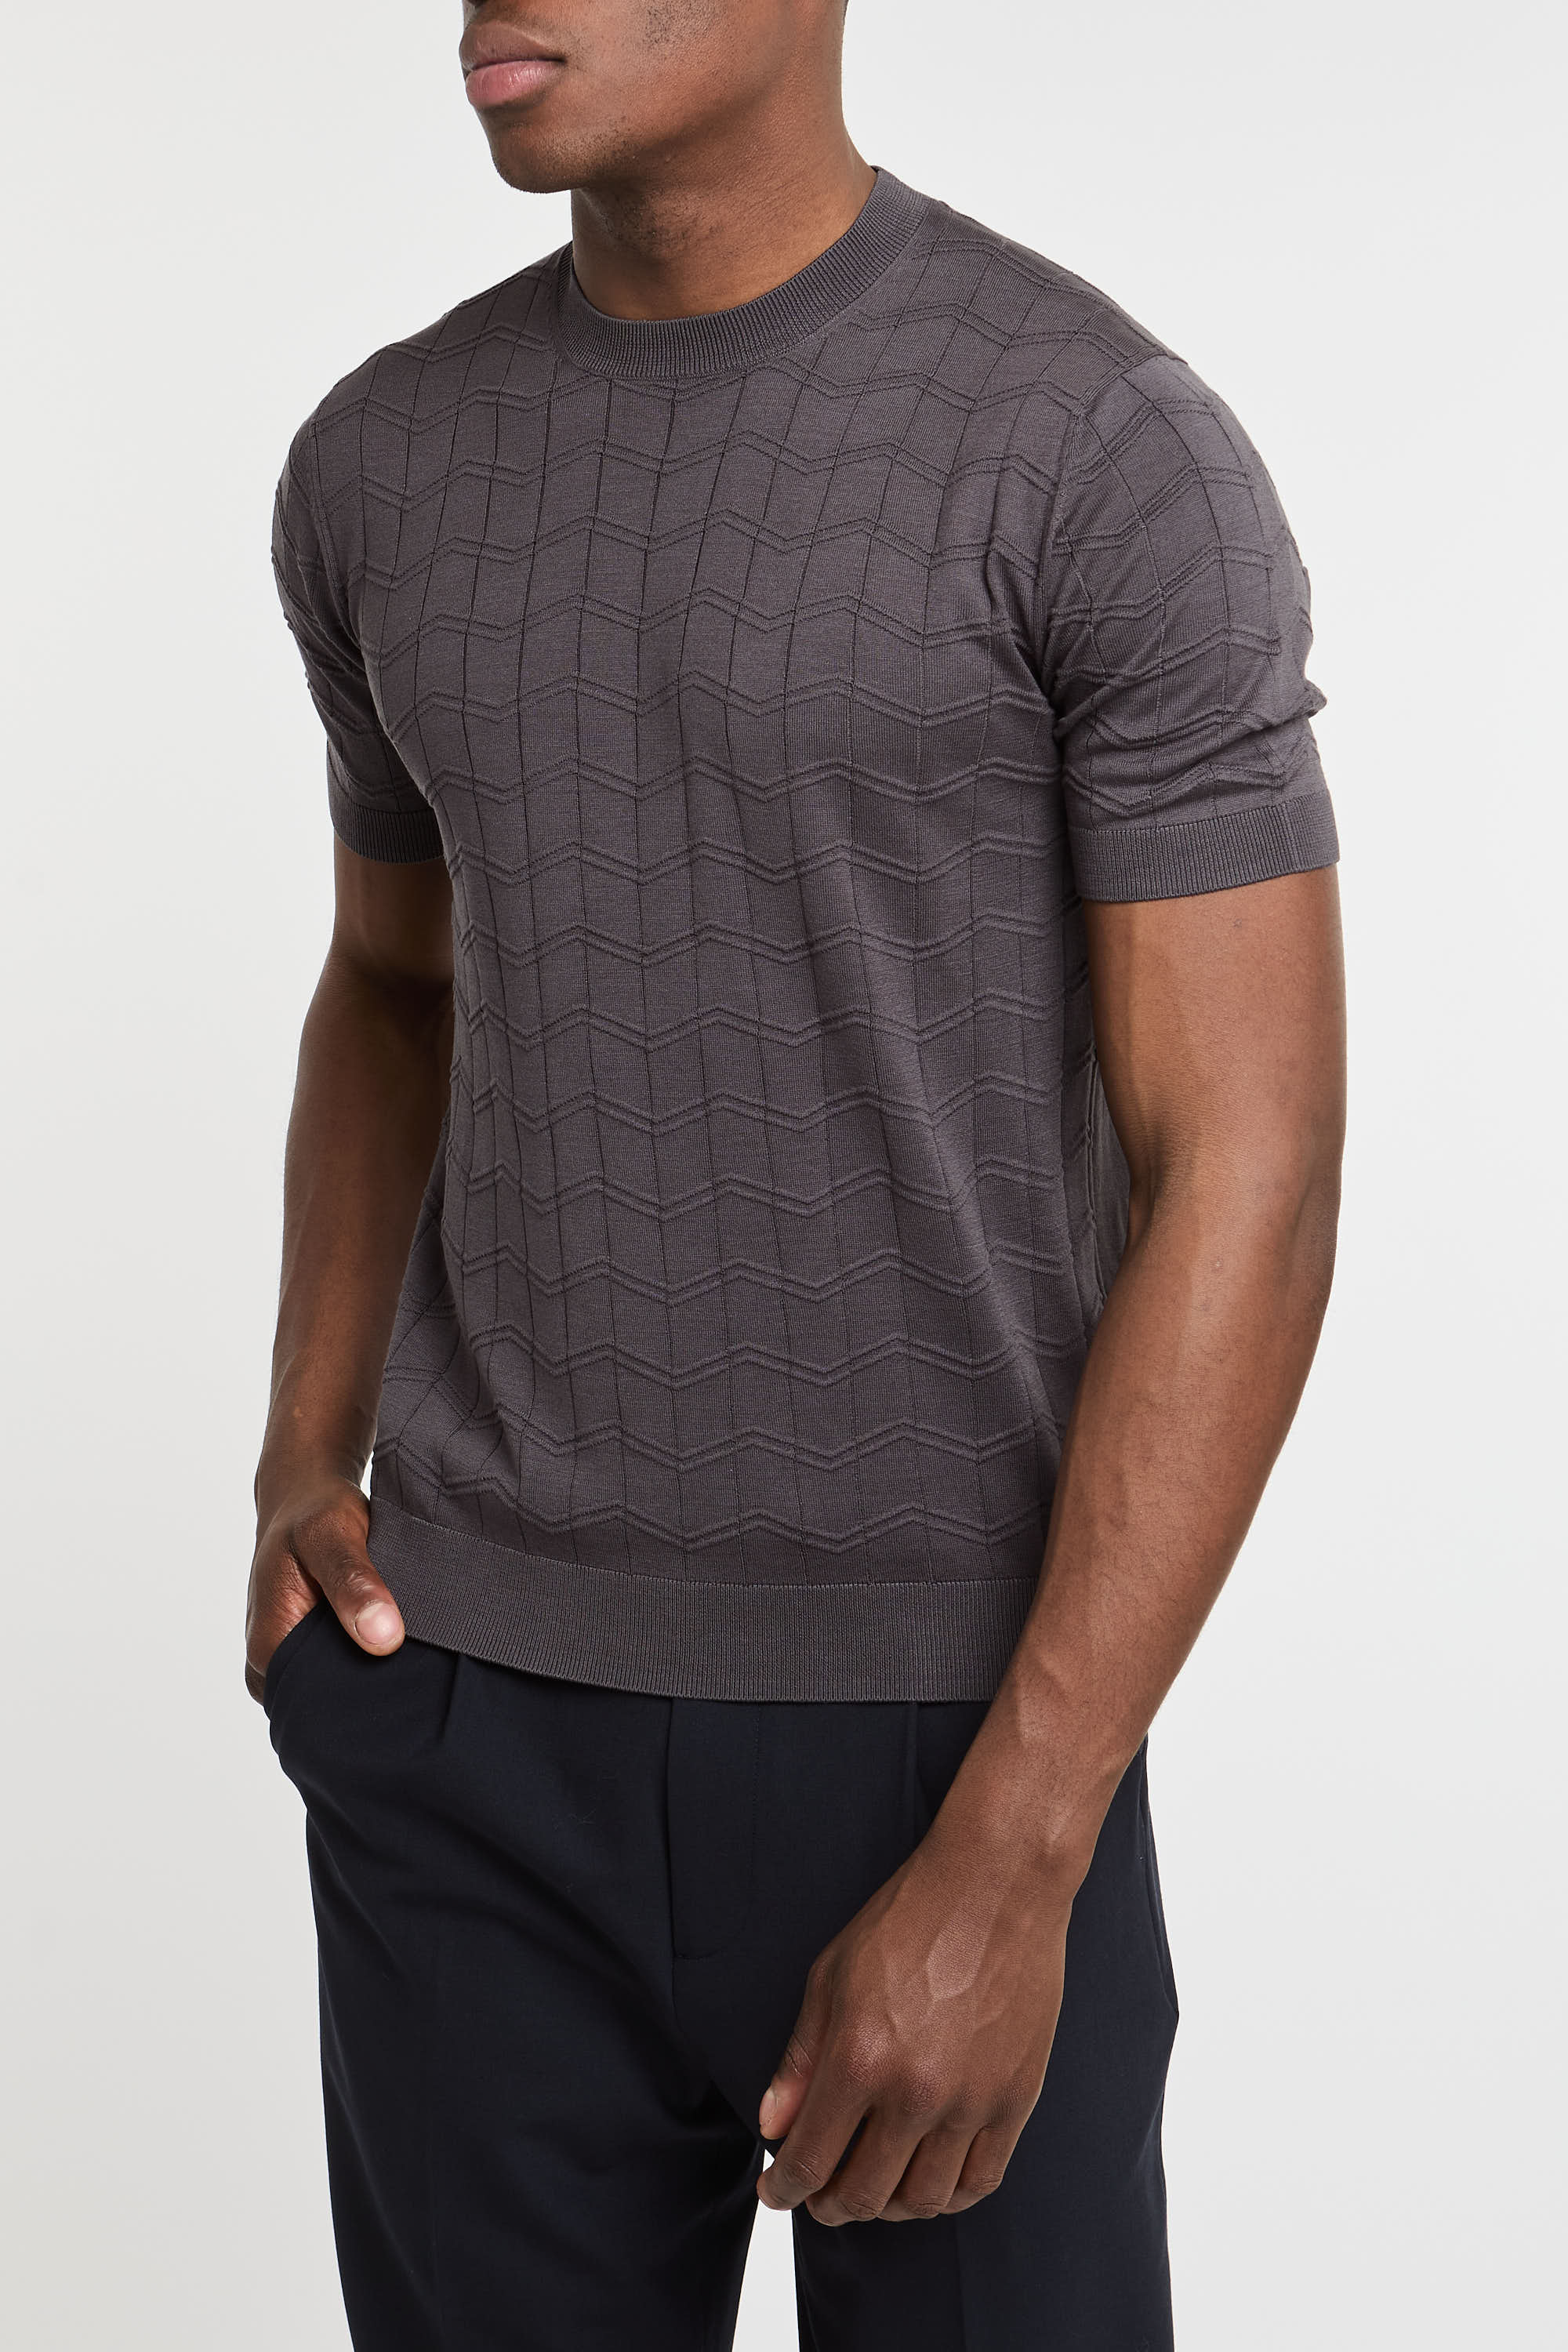 Paolo Pecora Silk/Cotton T-Shirt in Grey-4